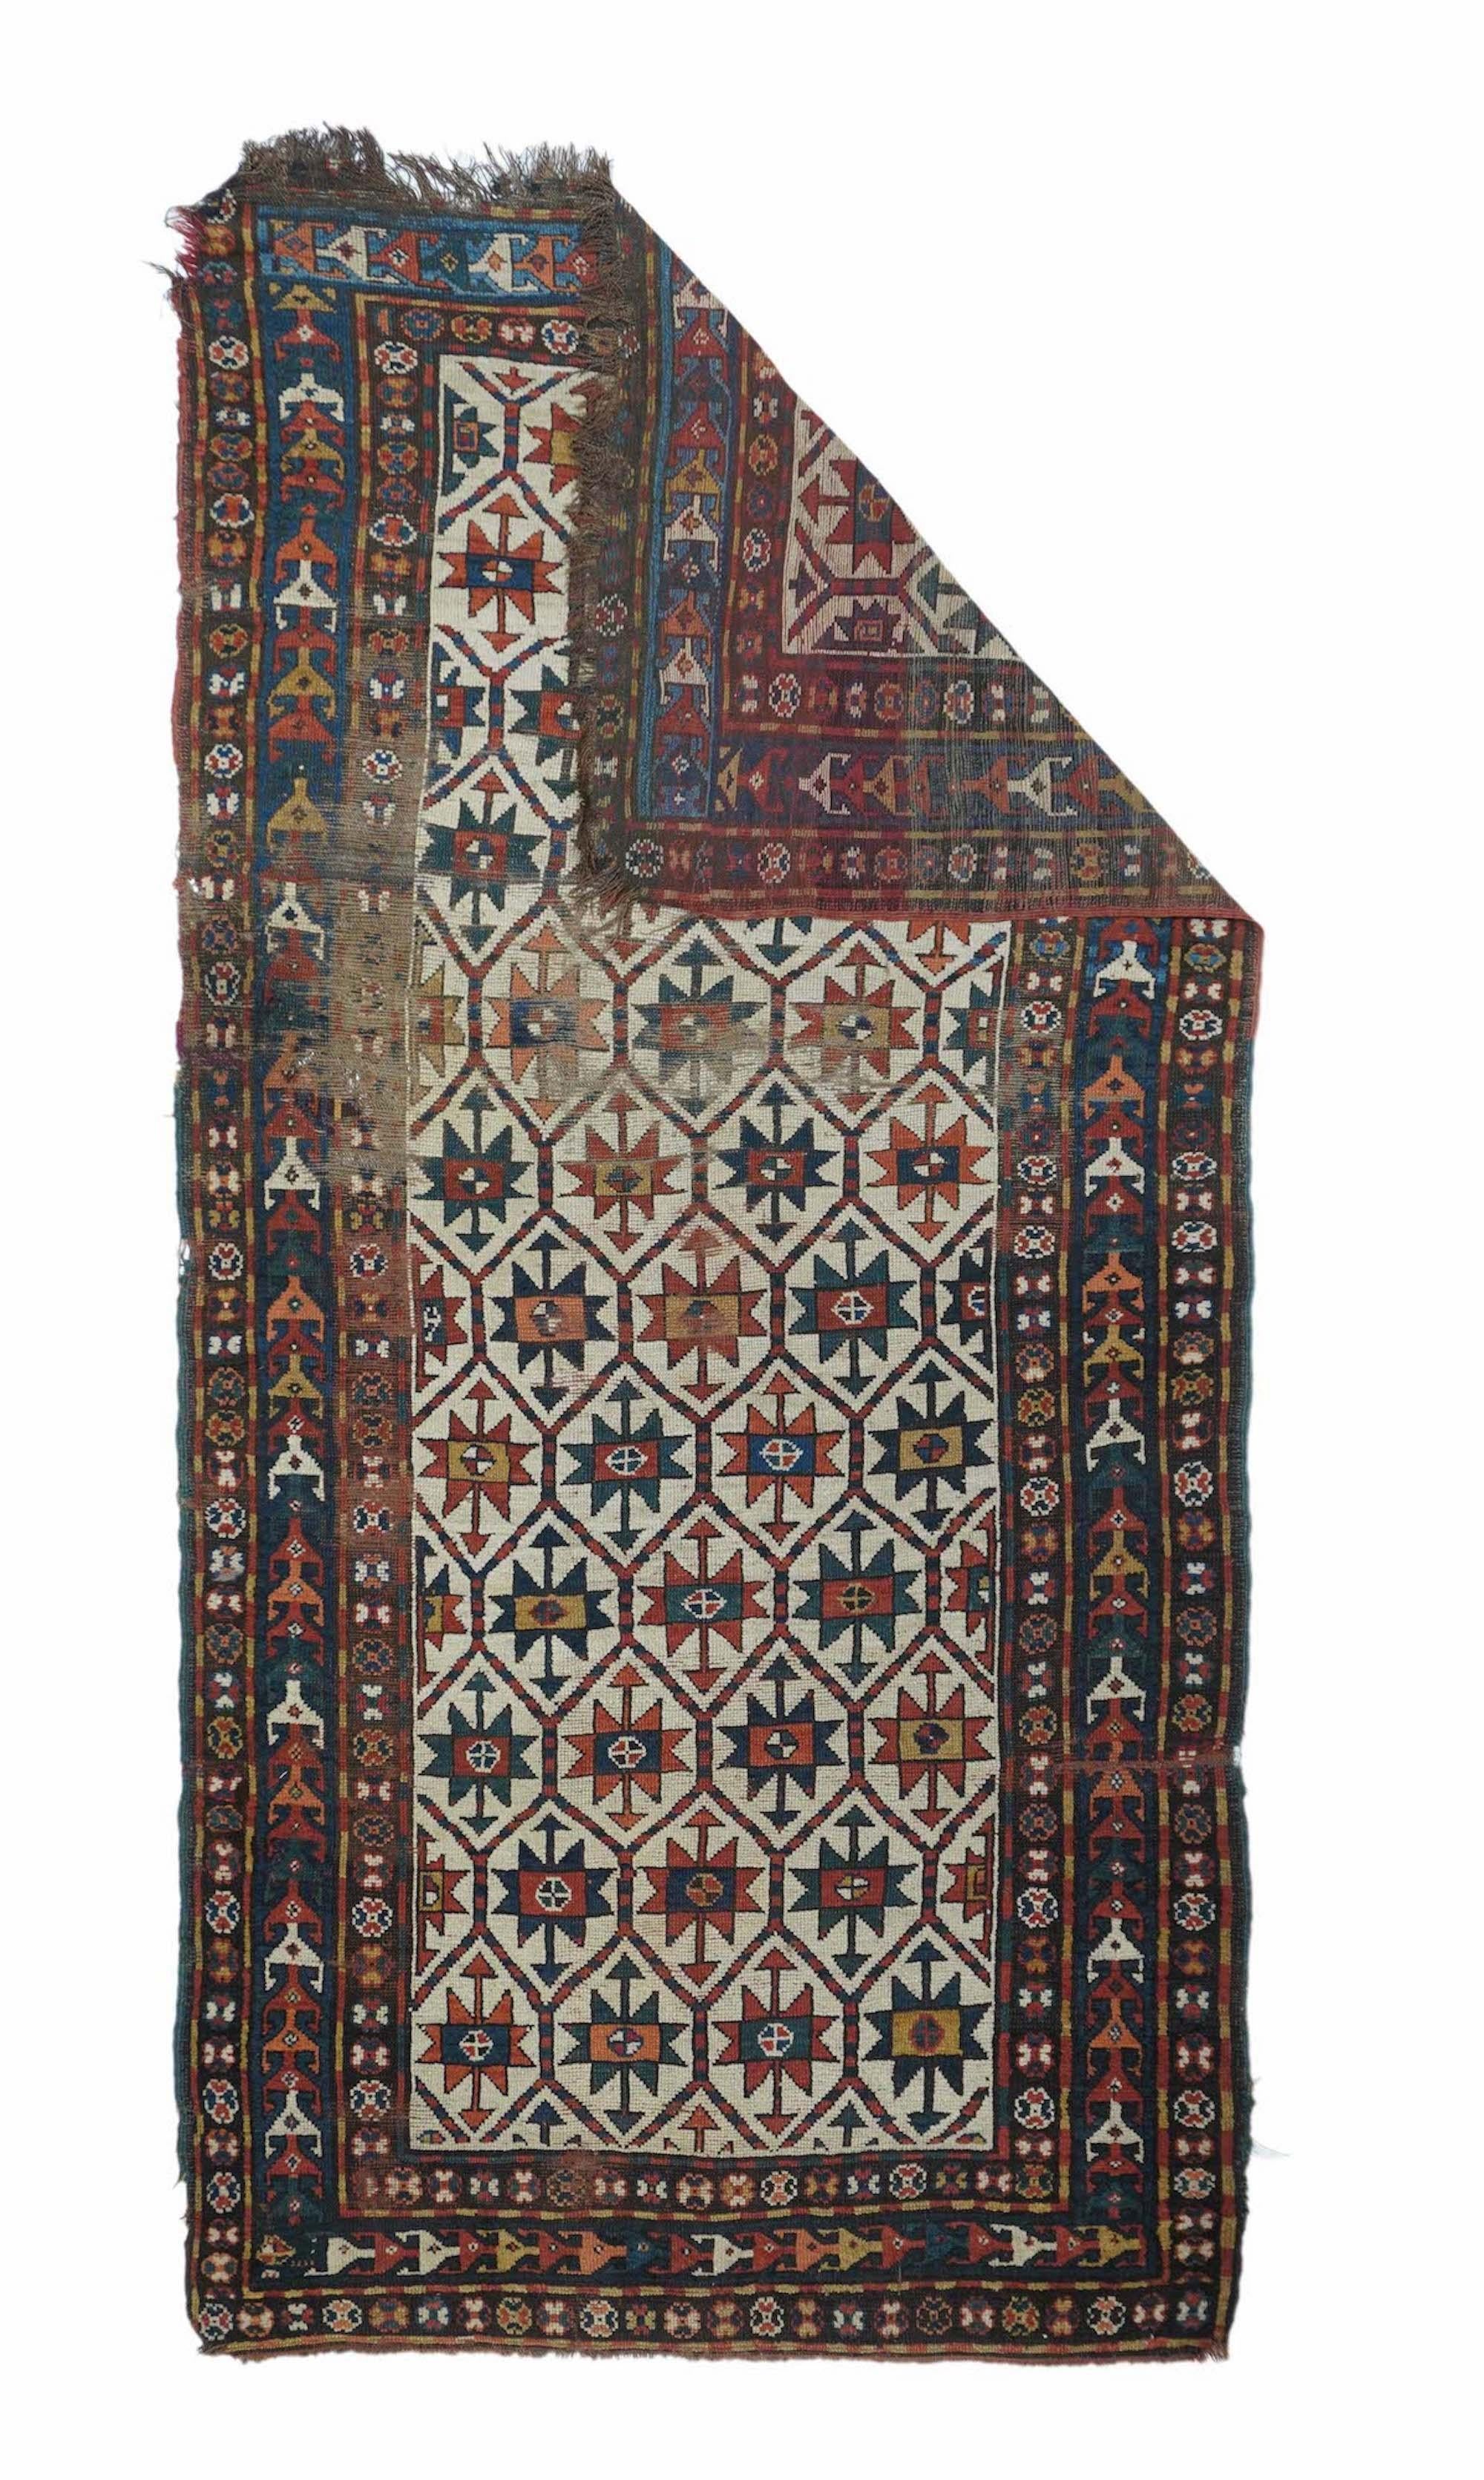 Antique Kazak Rug 4' x 8'1''.